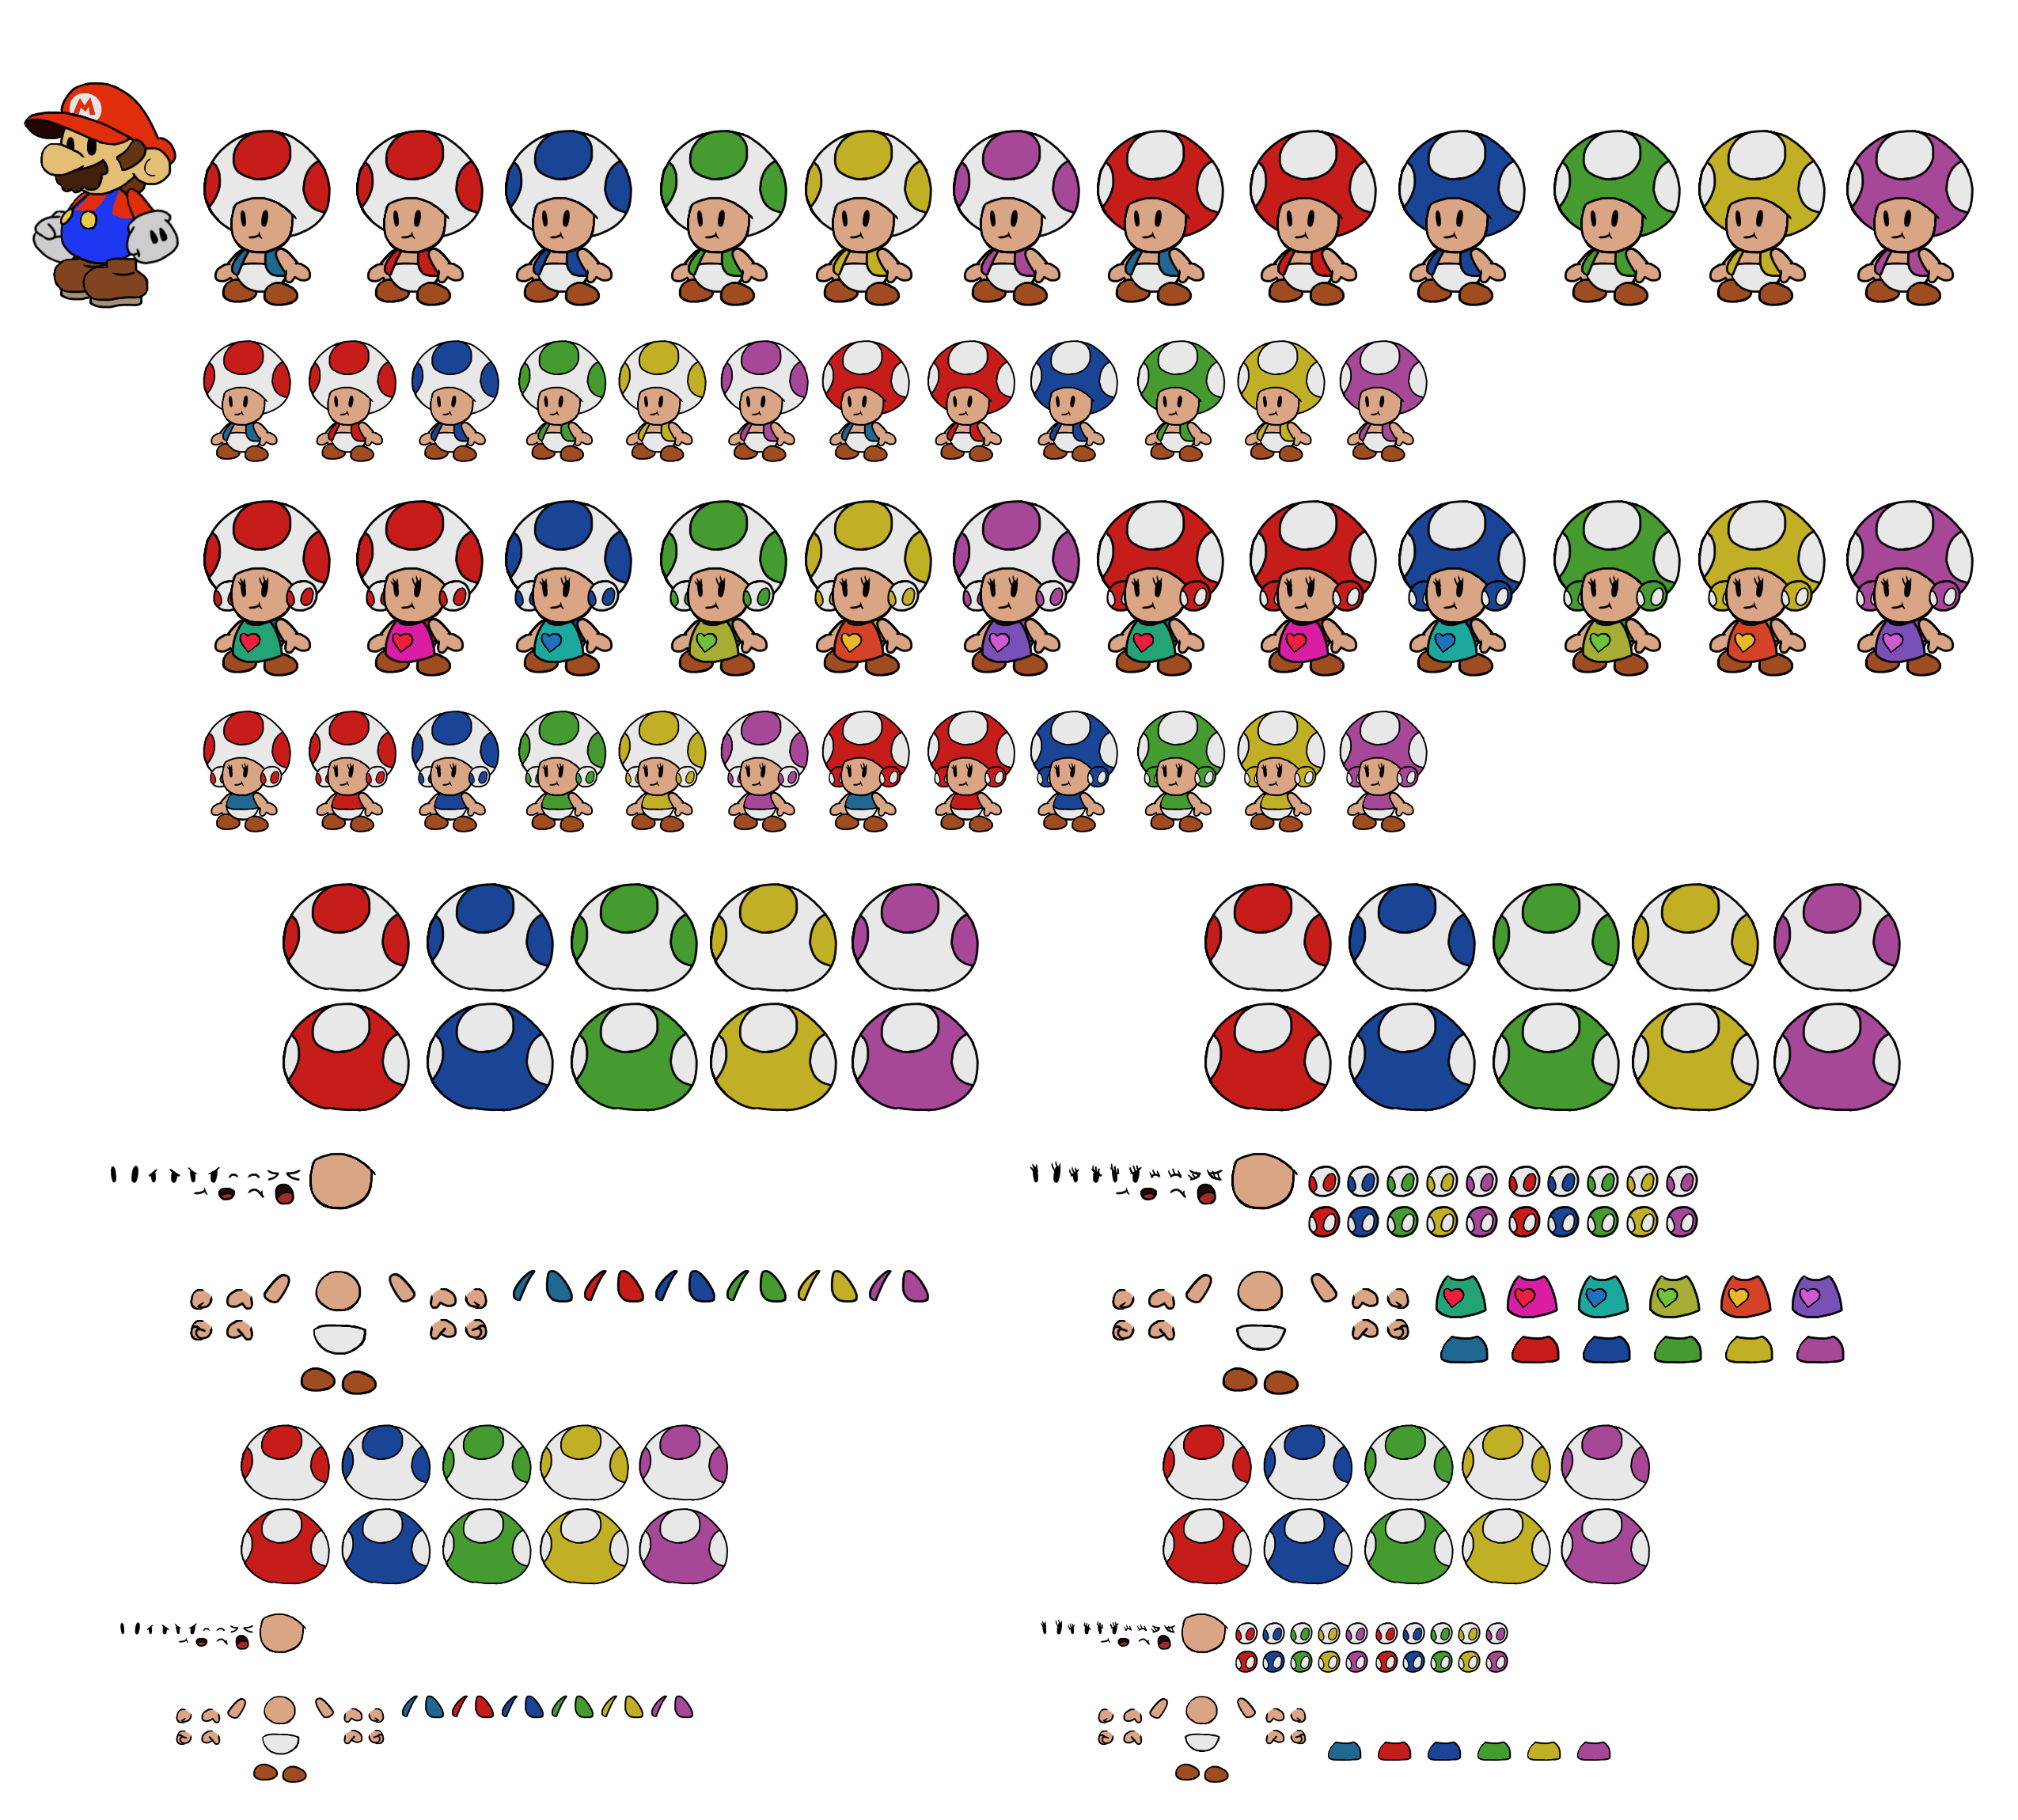 Mario Customs - Toads (Paper Mario-Style, Modern)